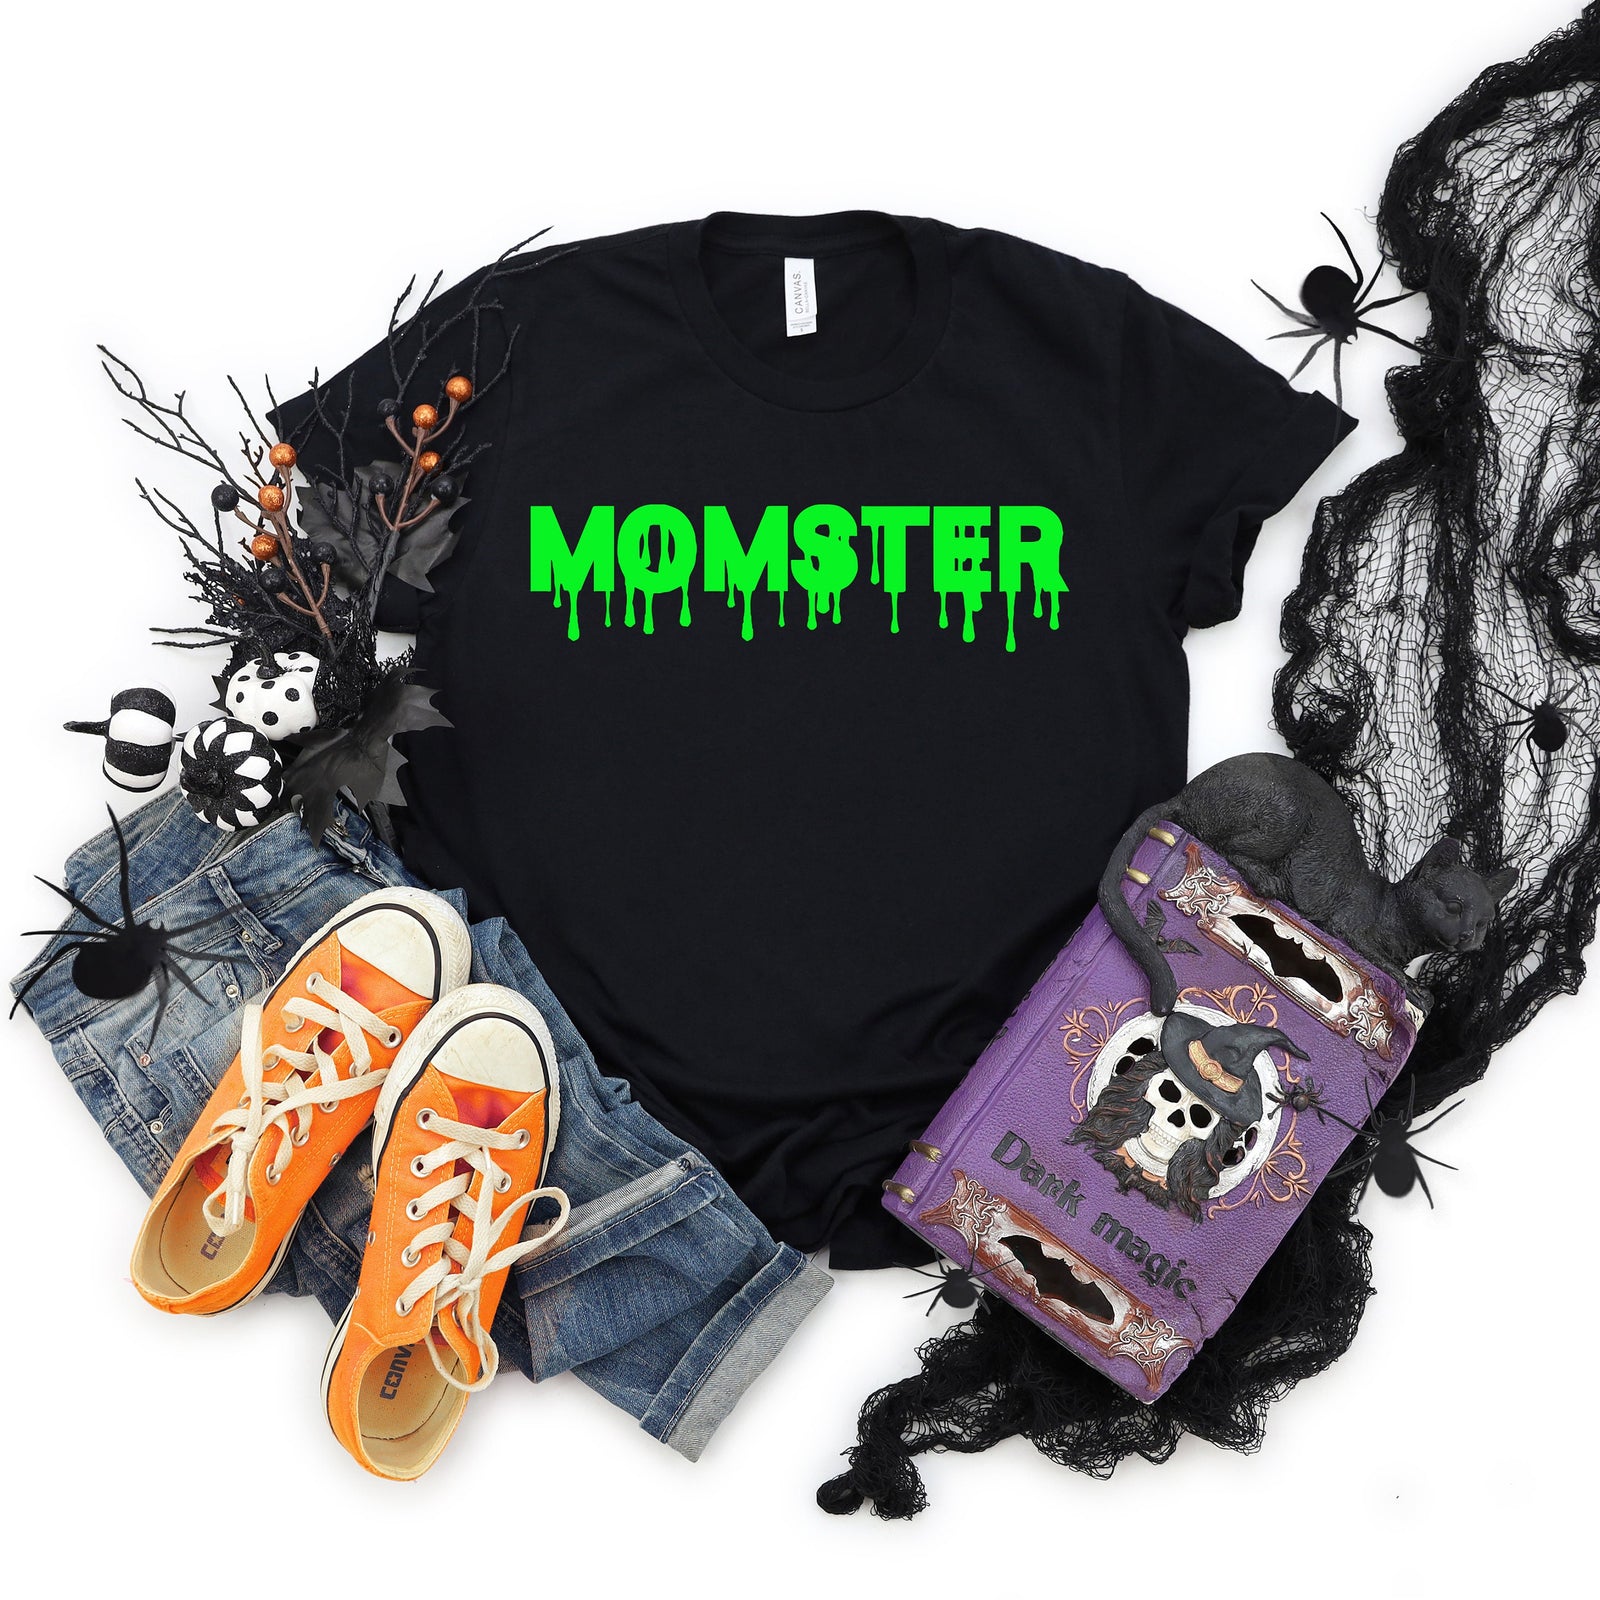 Momster - Halloween Adult T Shirt - Mom T Shirt - Funny T Shirts - Green Slime